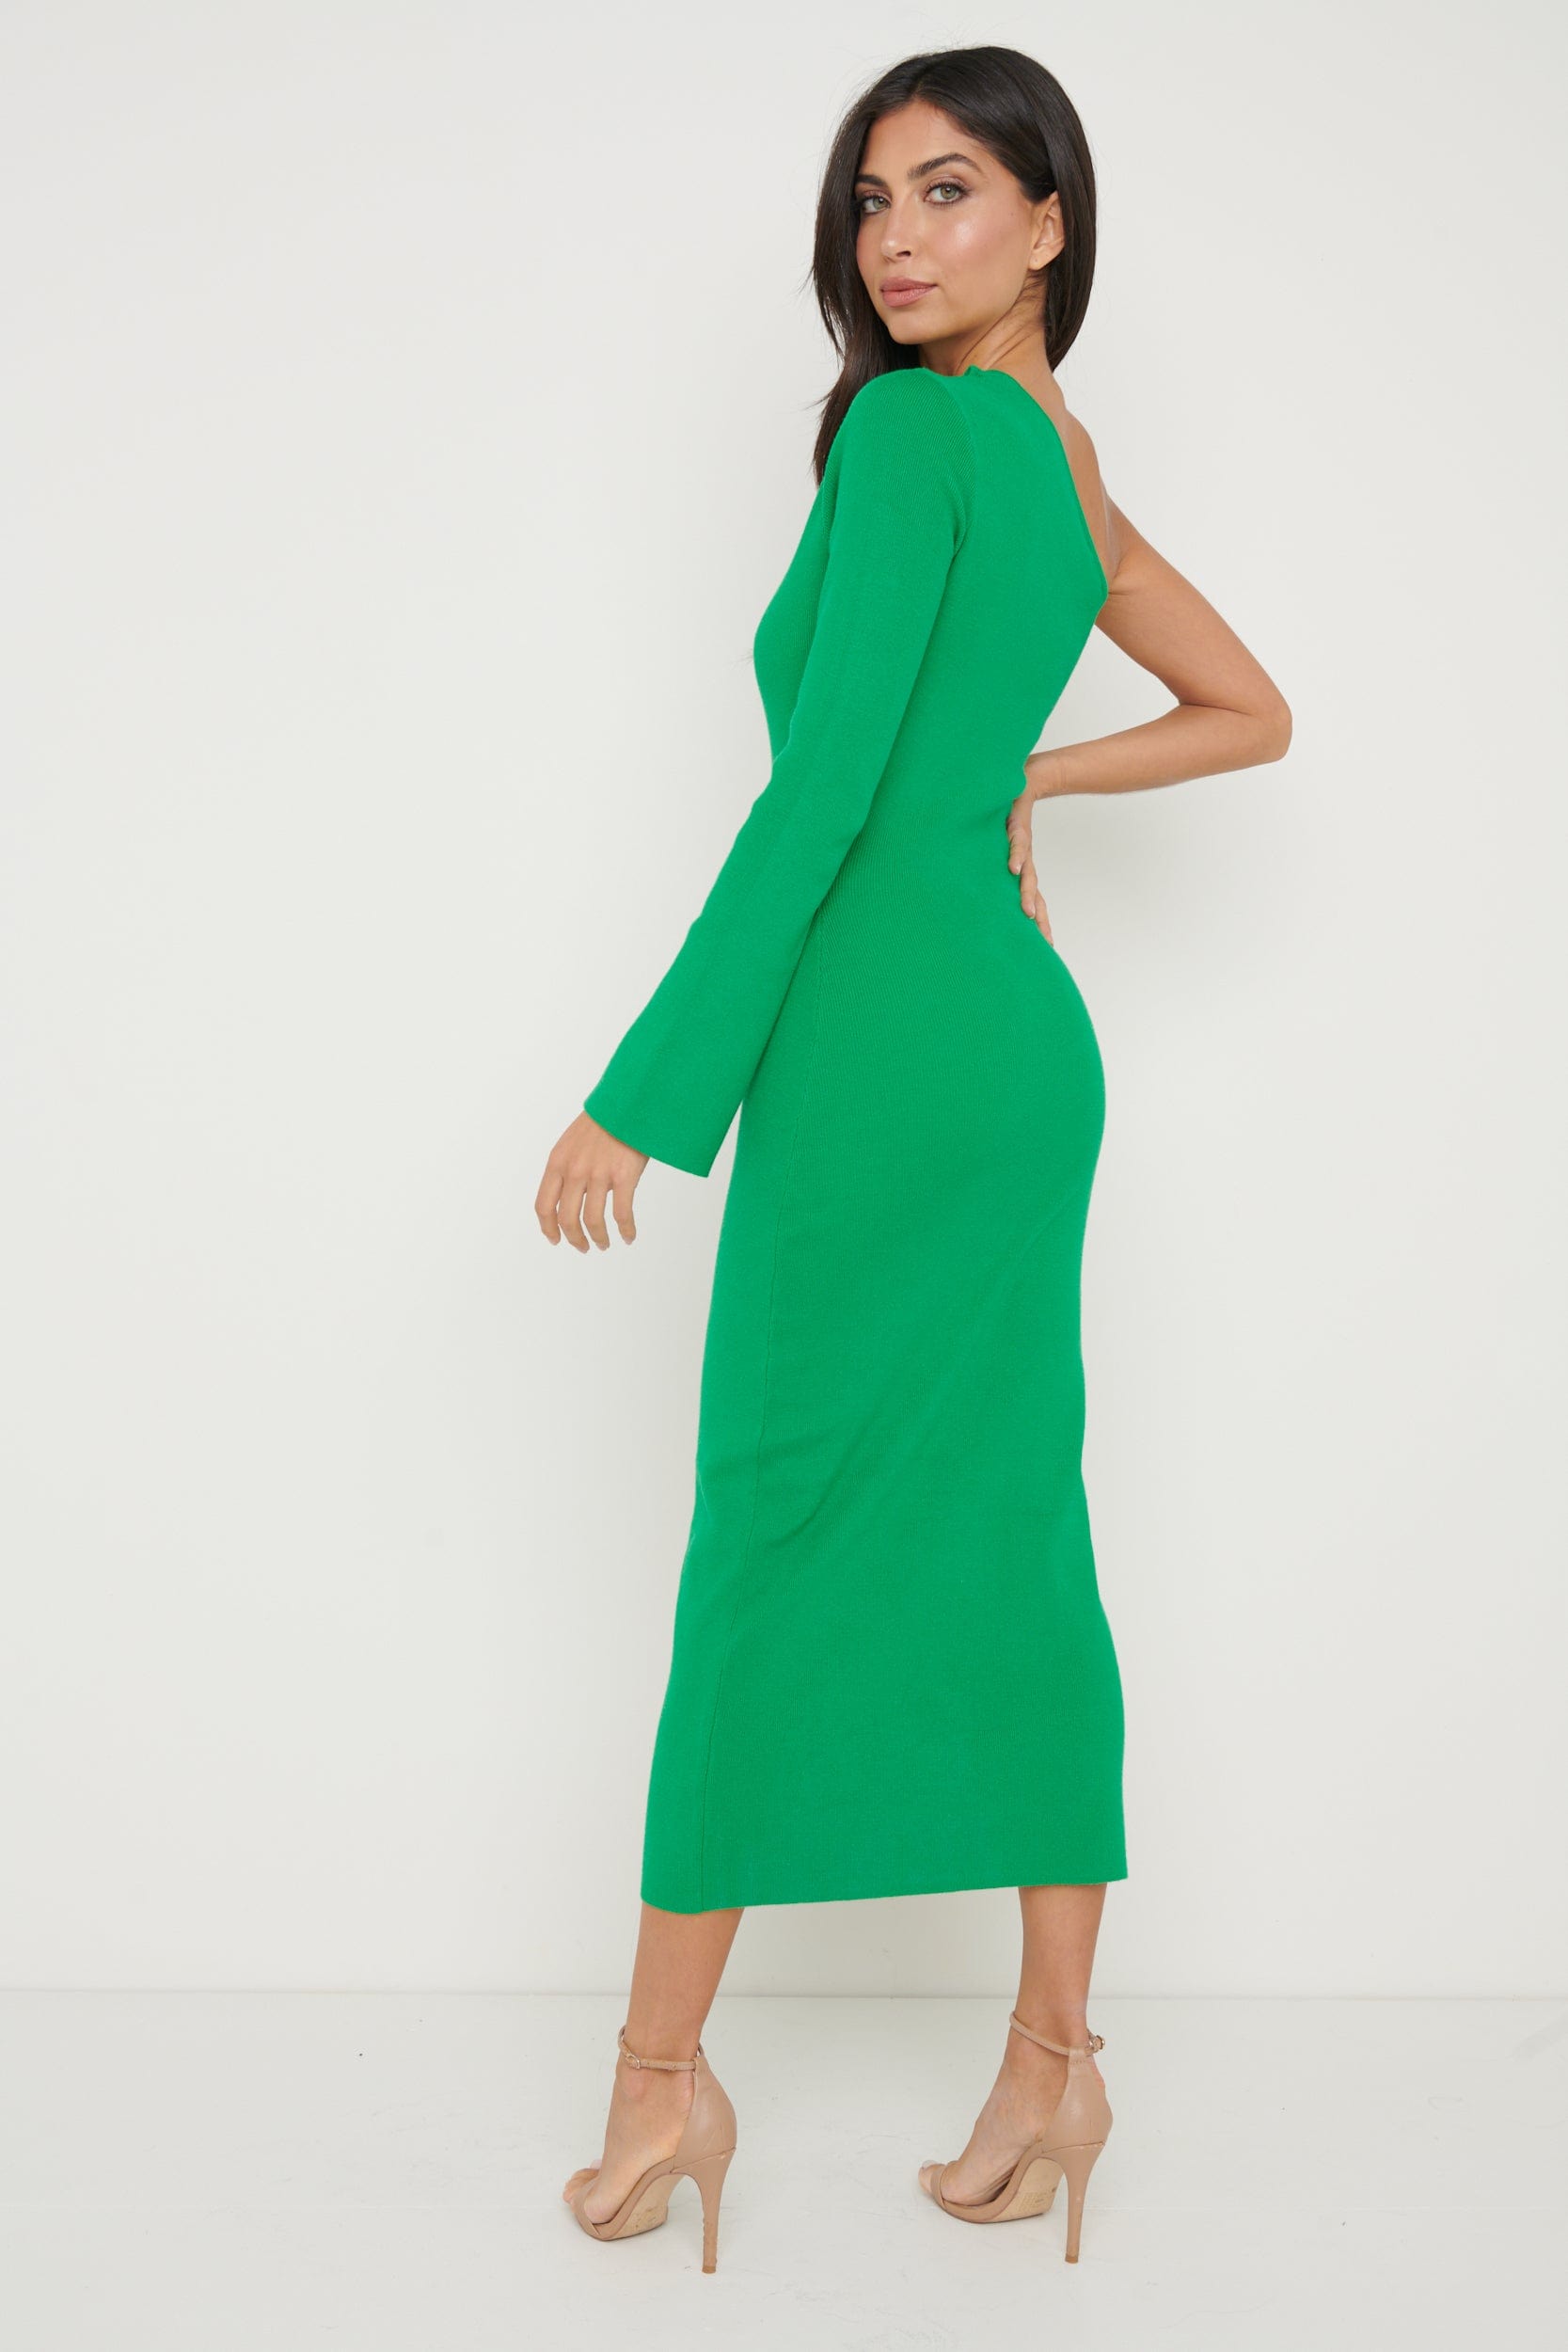 Alayah One Shoulder Midaxi Knit Dress - Green